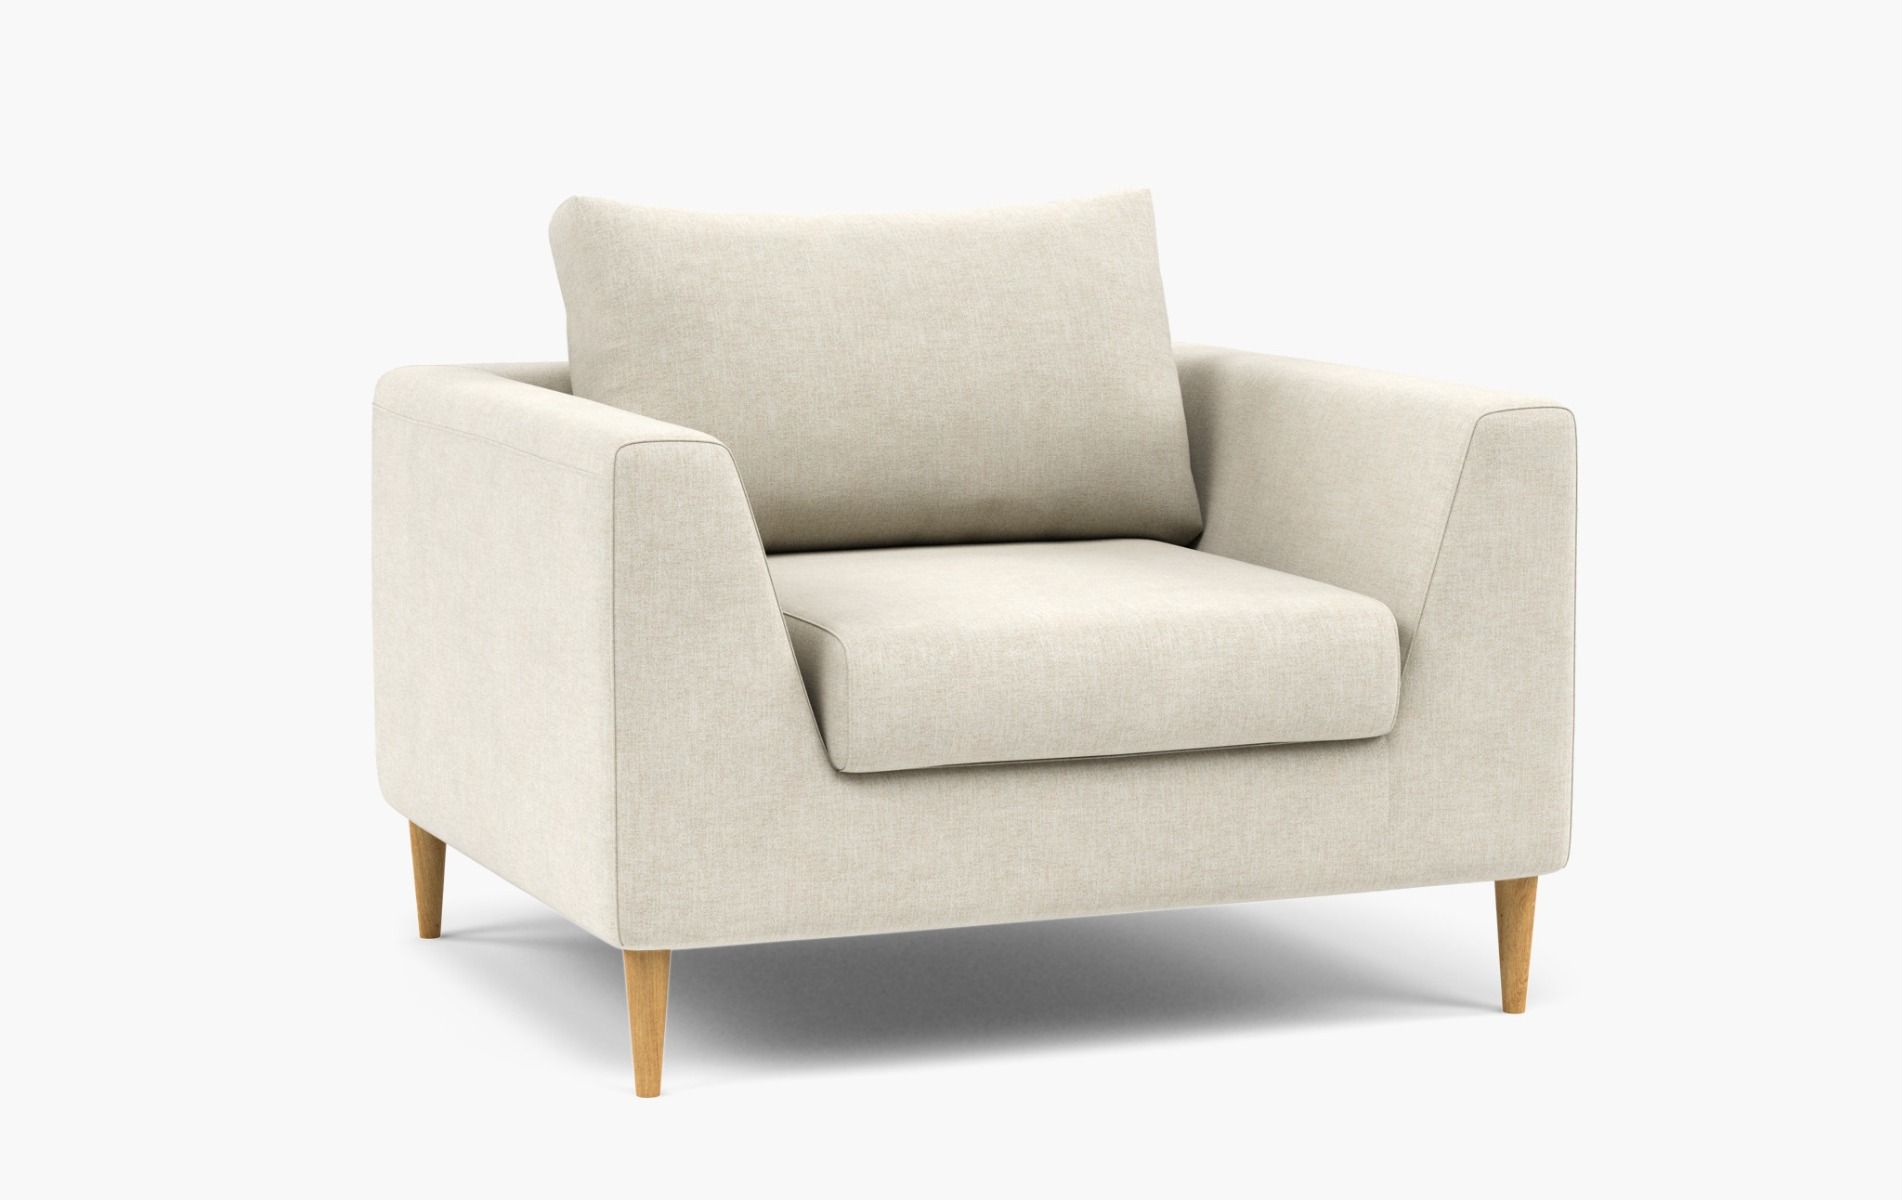 Asher Petite Chair | Interior Define